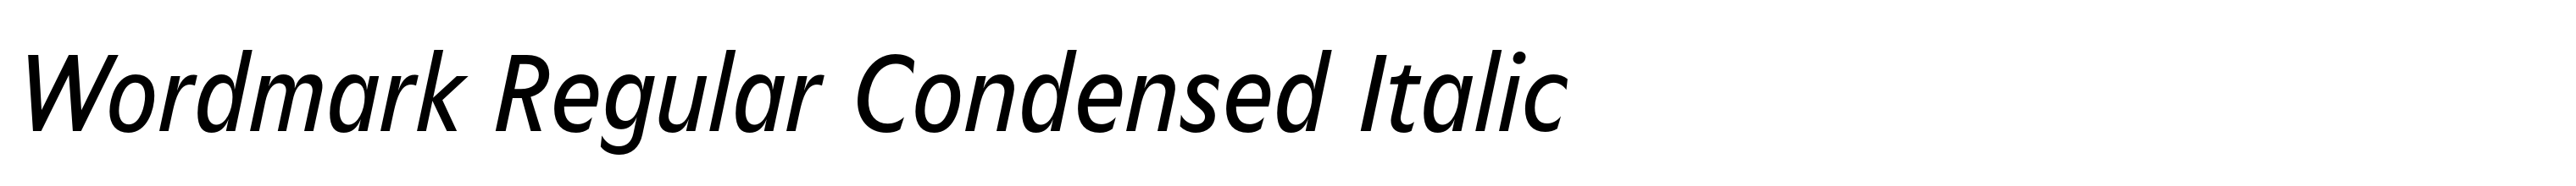 Wordmark Regular Condensed Italic